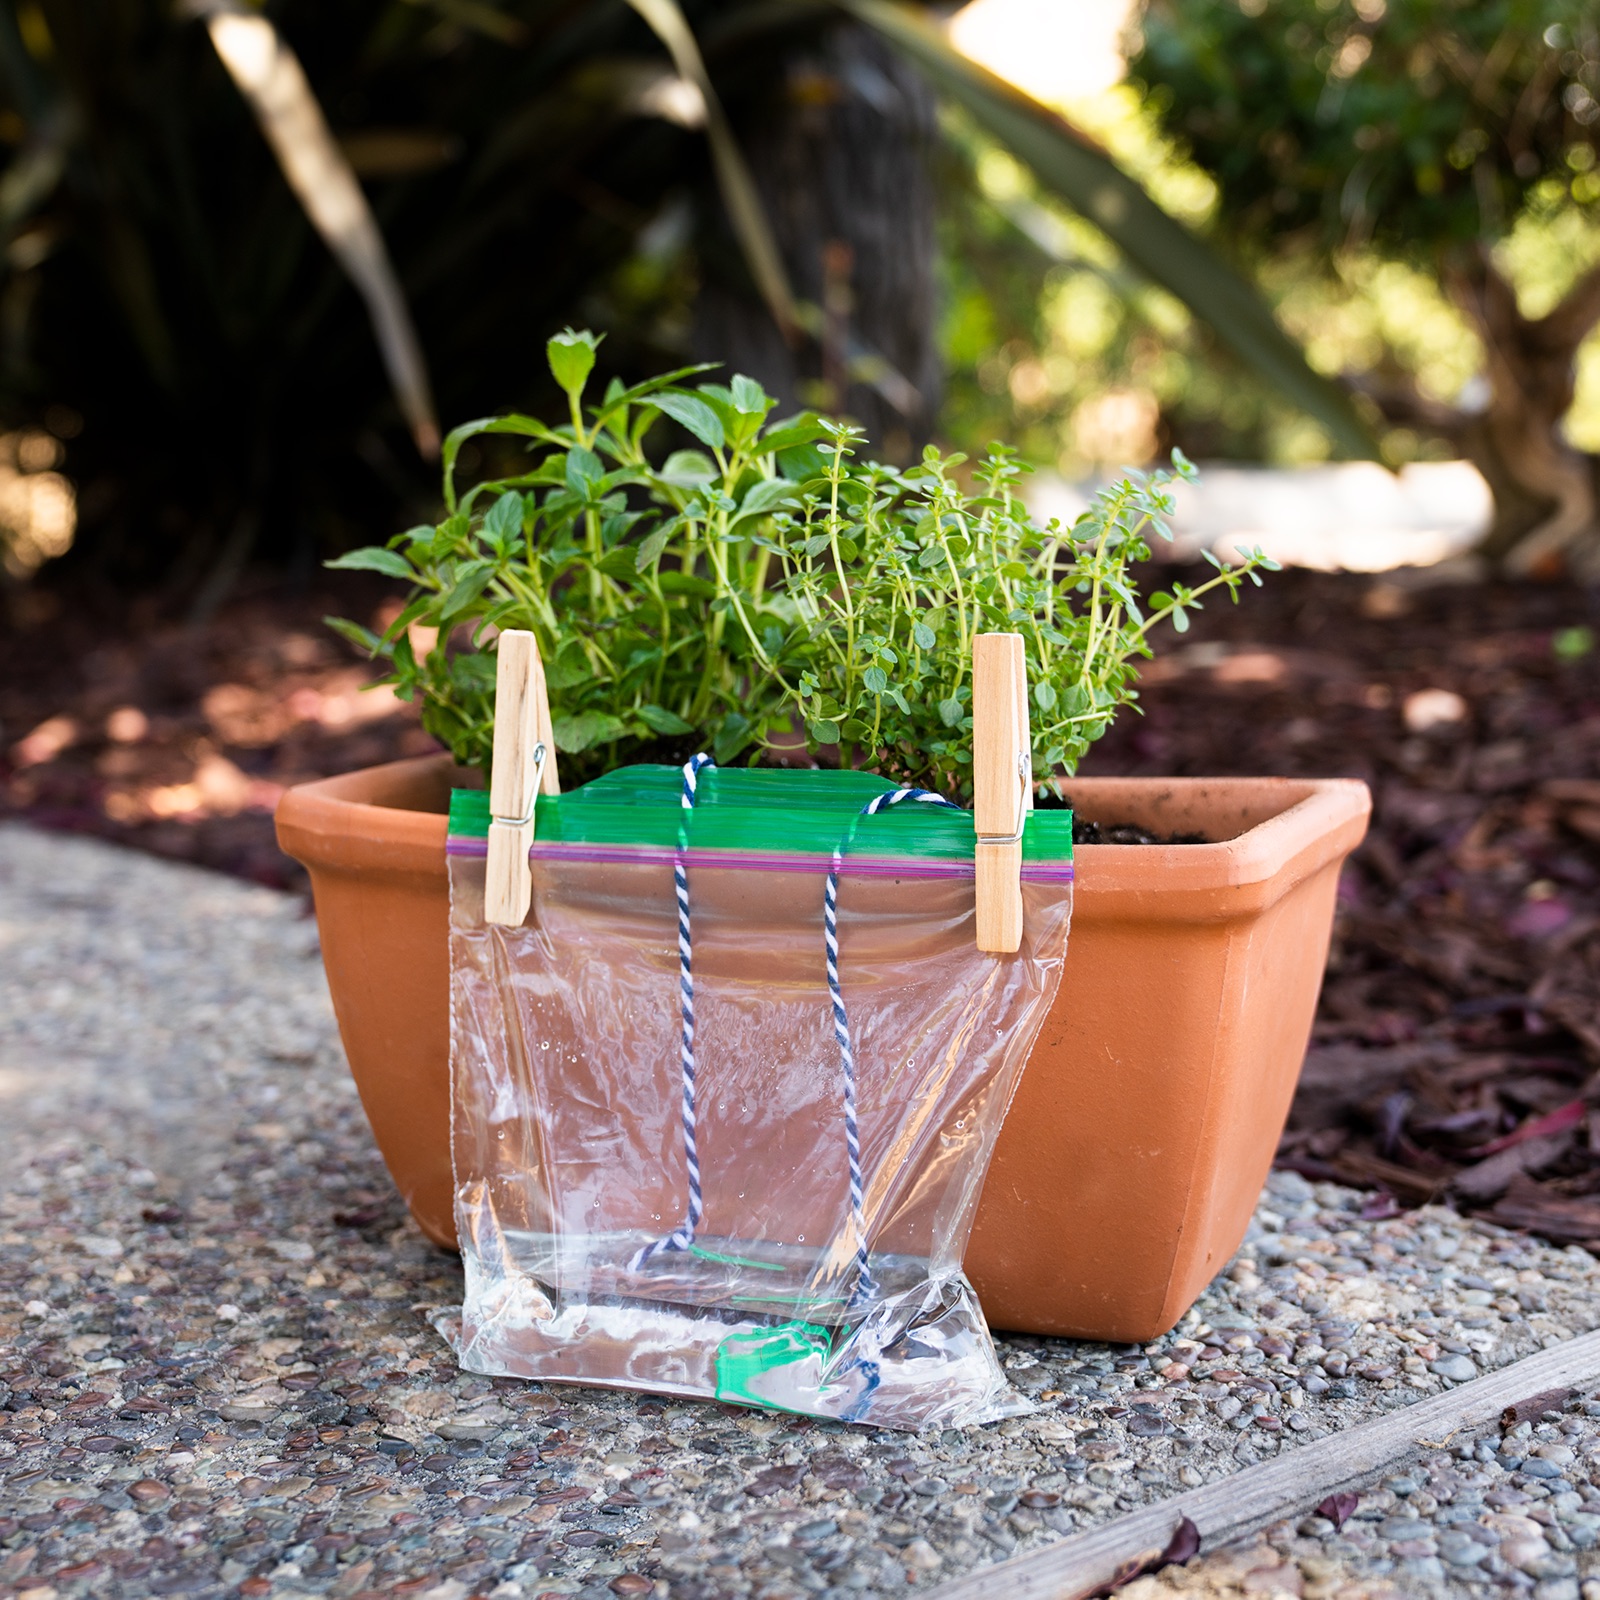 1. DIY Self-Watering Planter